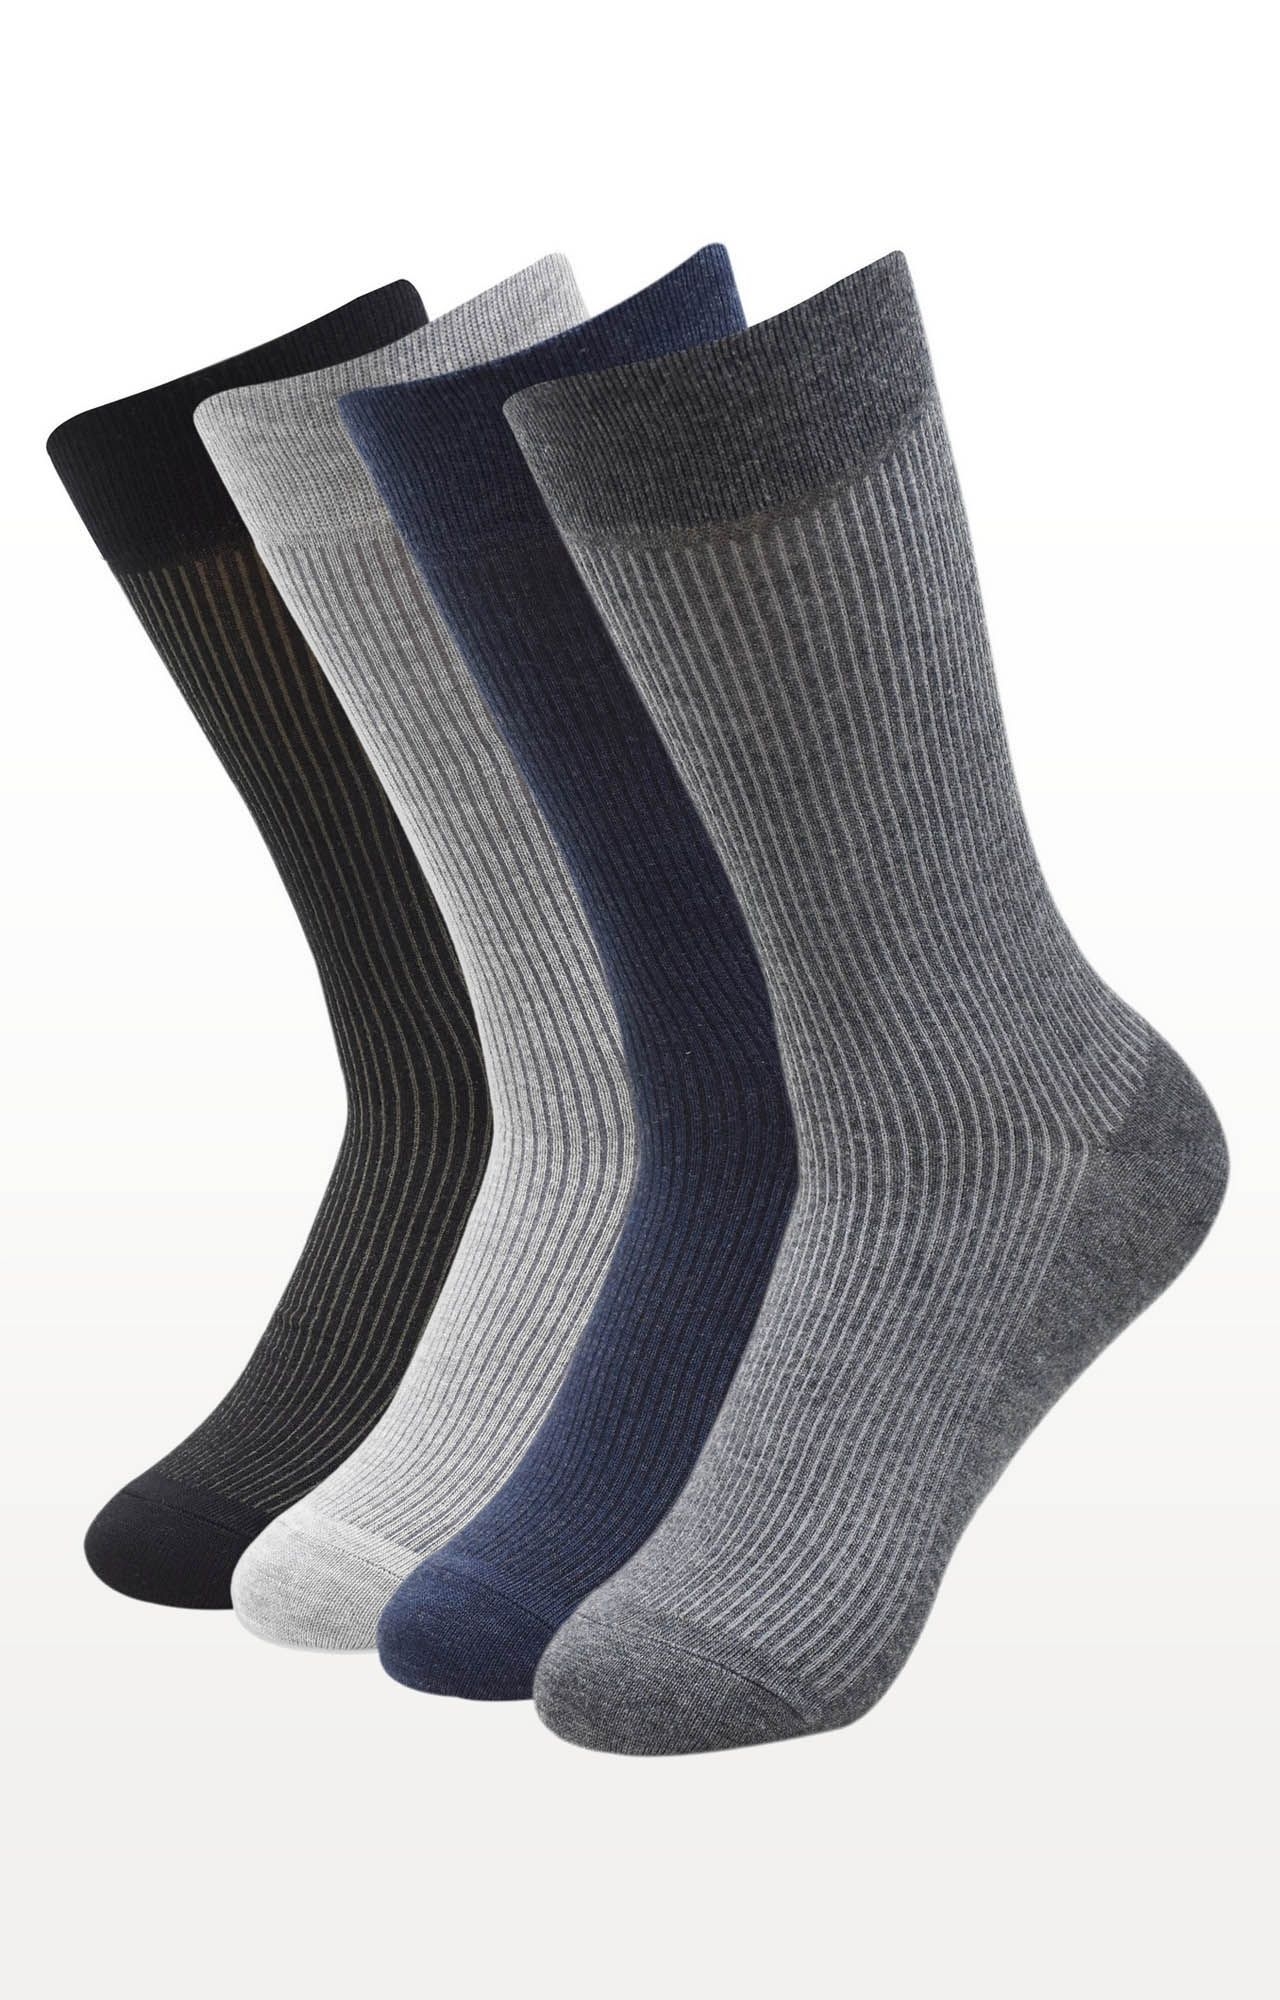 Multi-Coloured Striped Socks (Pack of 4)